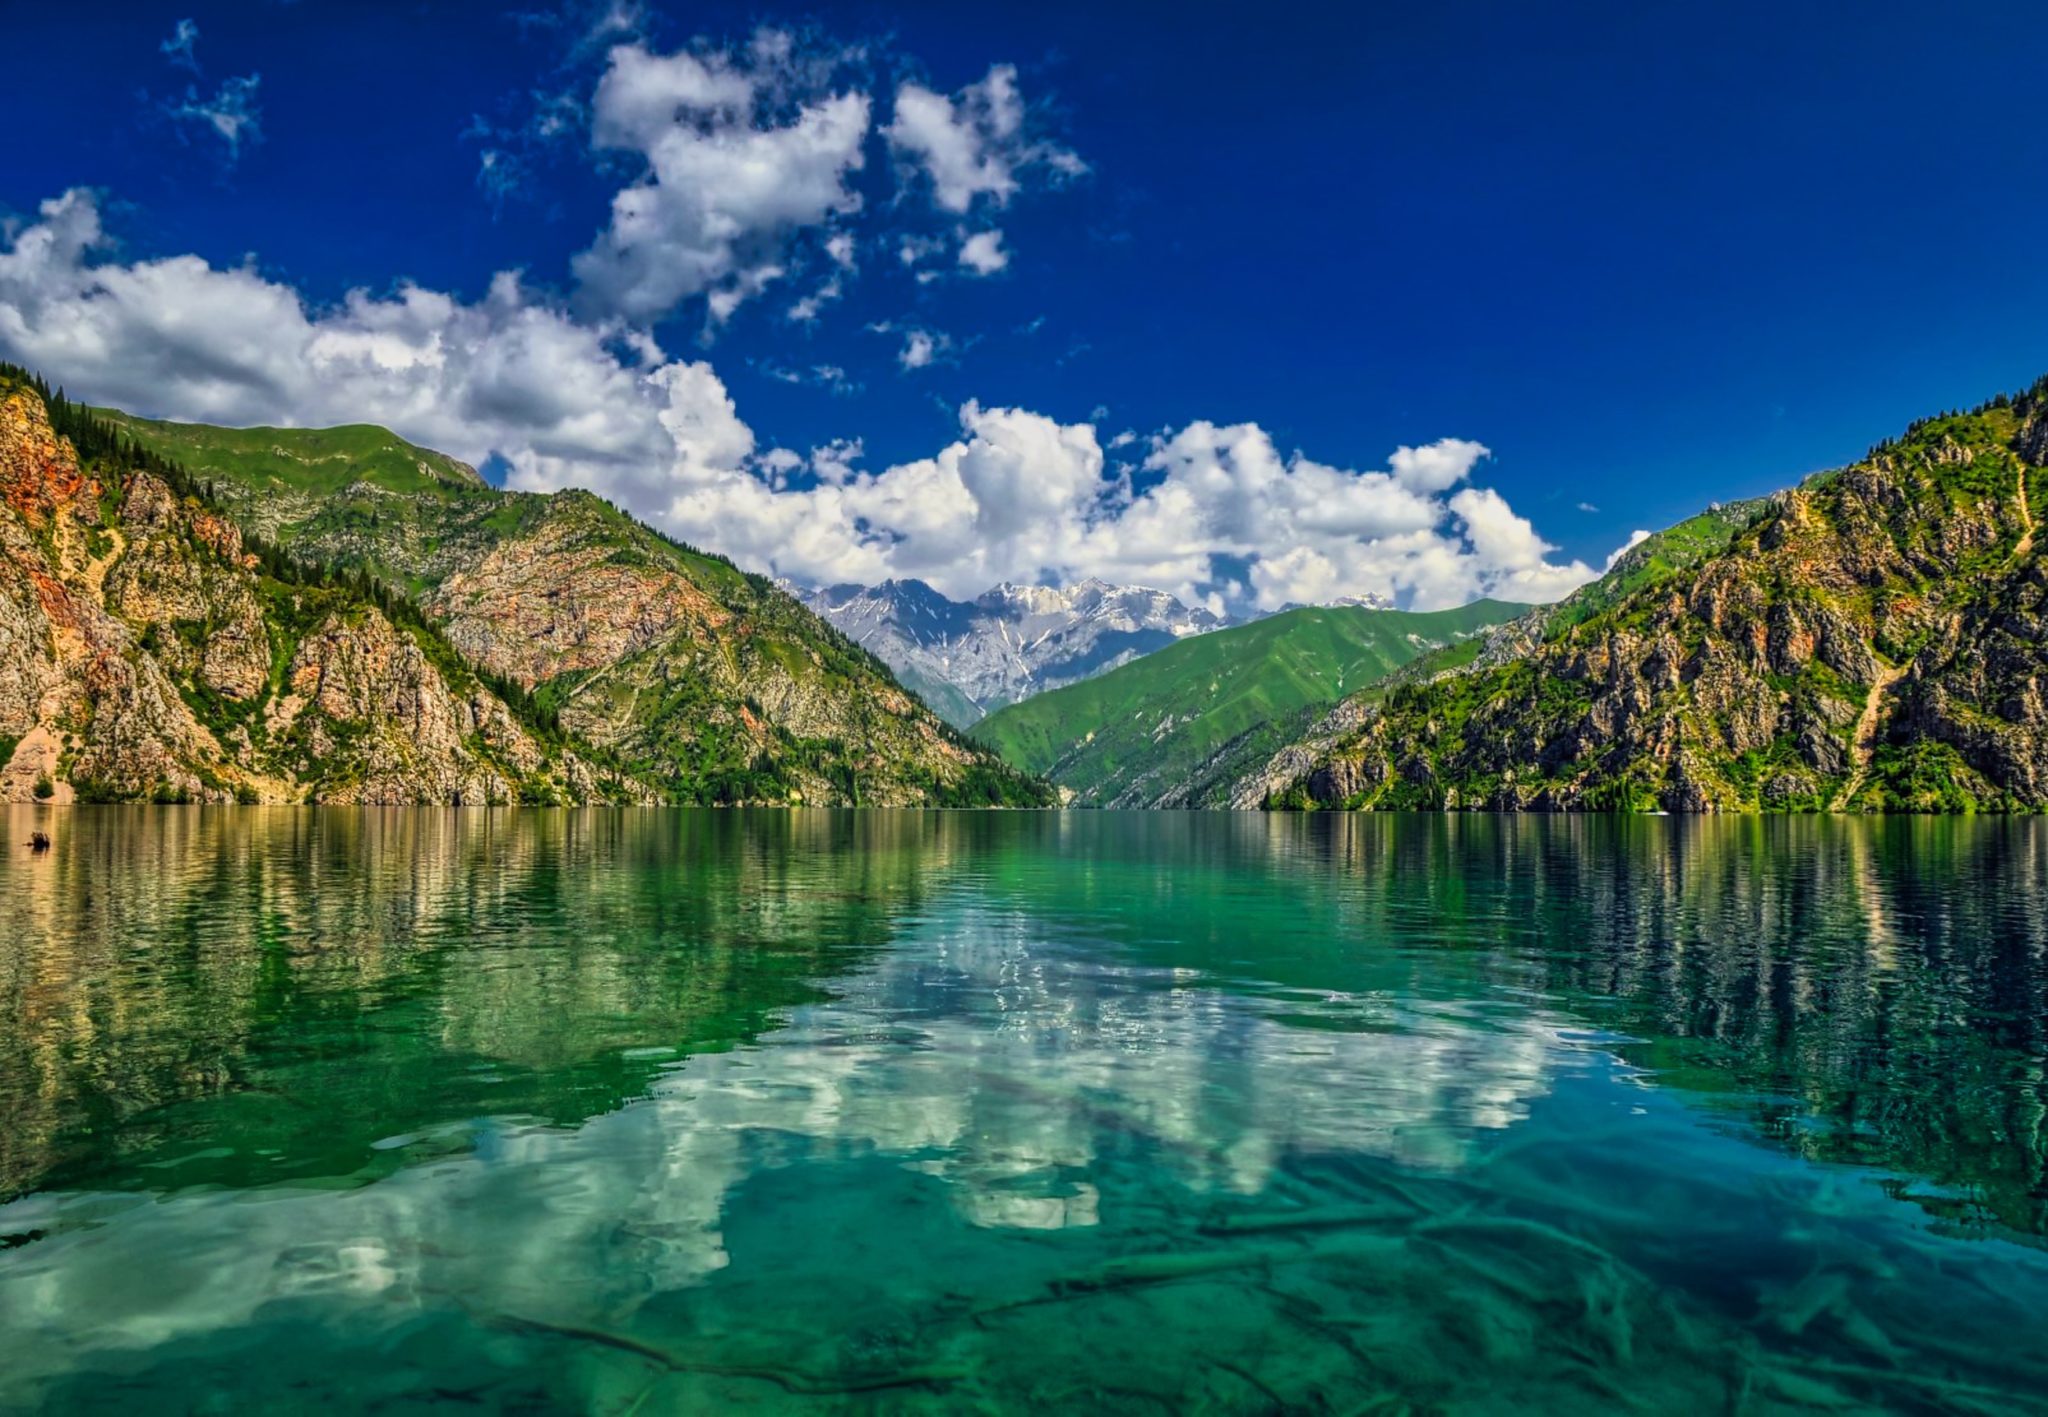 кызыл куль озеро казахстан